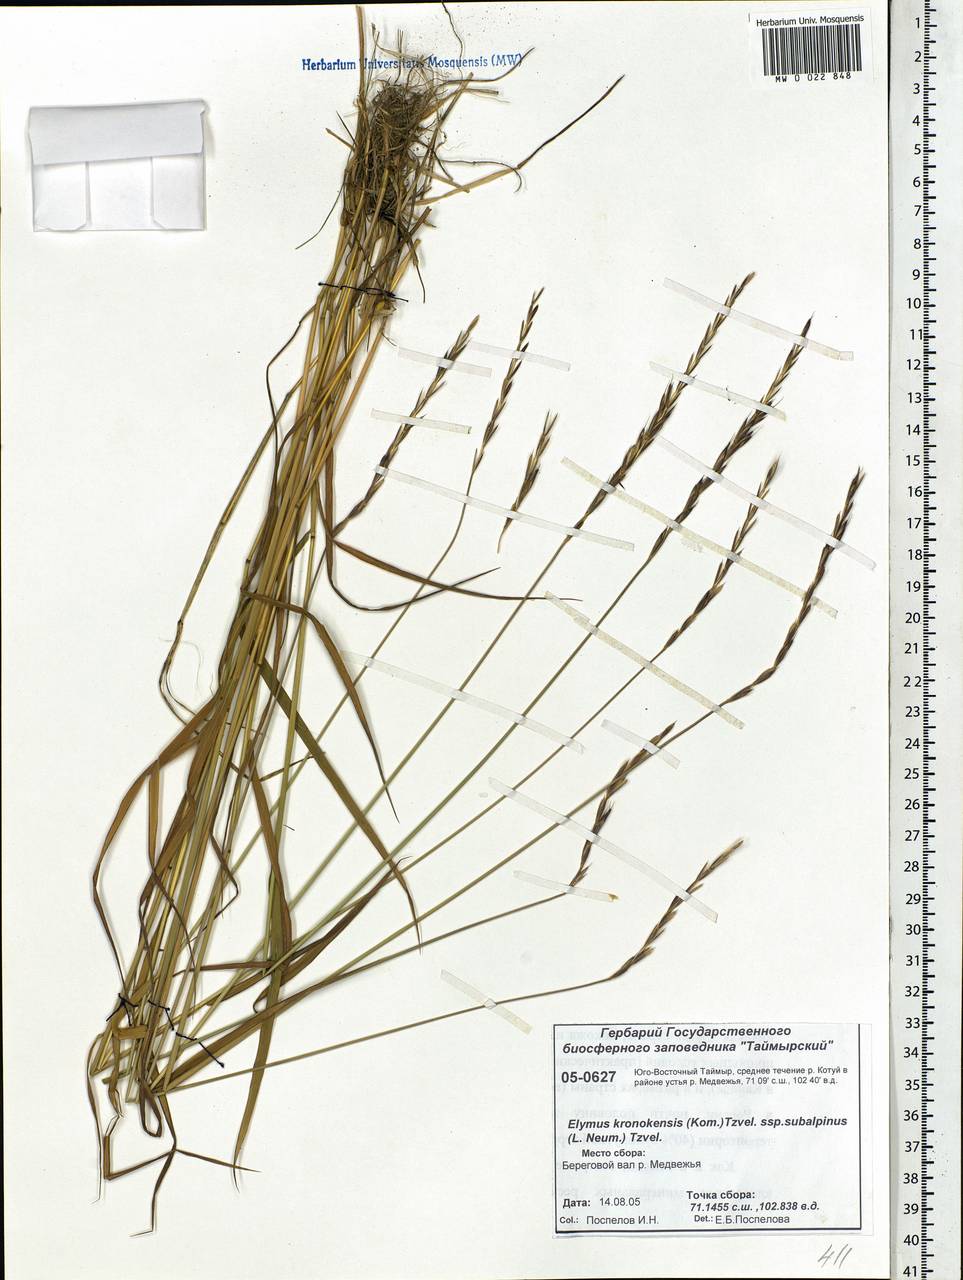 Elymus macrourus (Turcz. ex Steud.) Tzvelev, Siberia, Central Siberia (S3) (Russia)